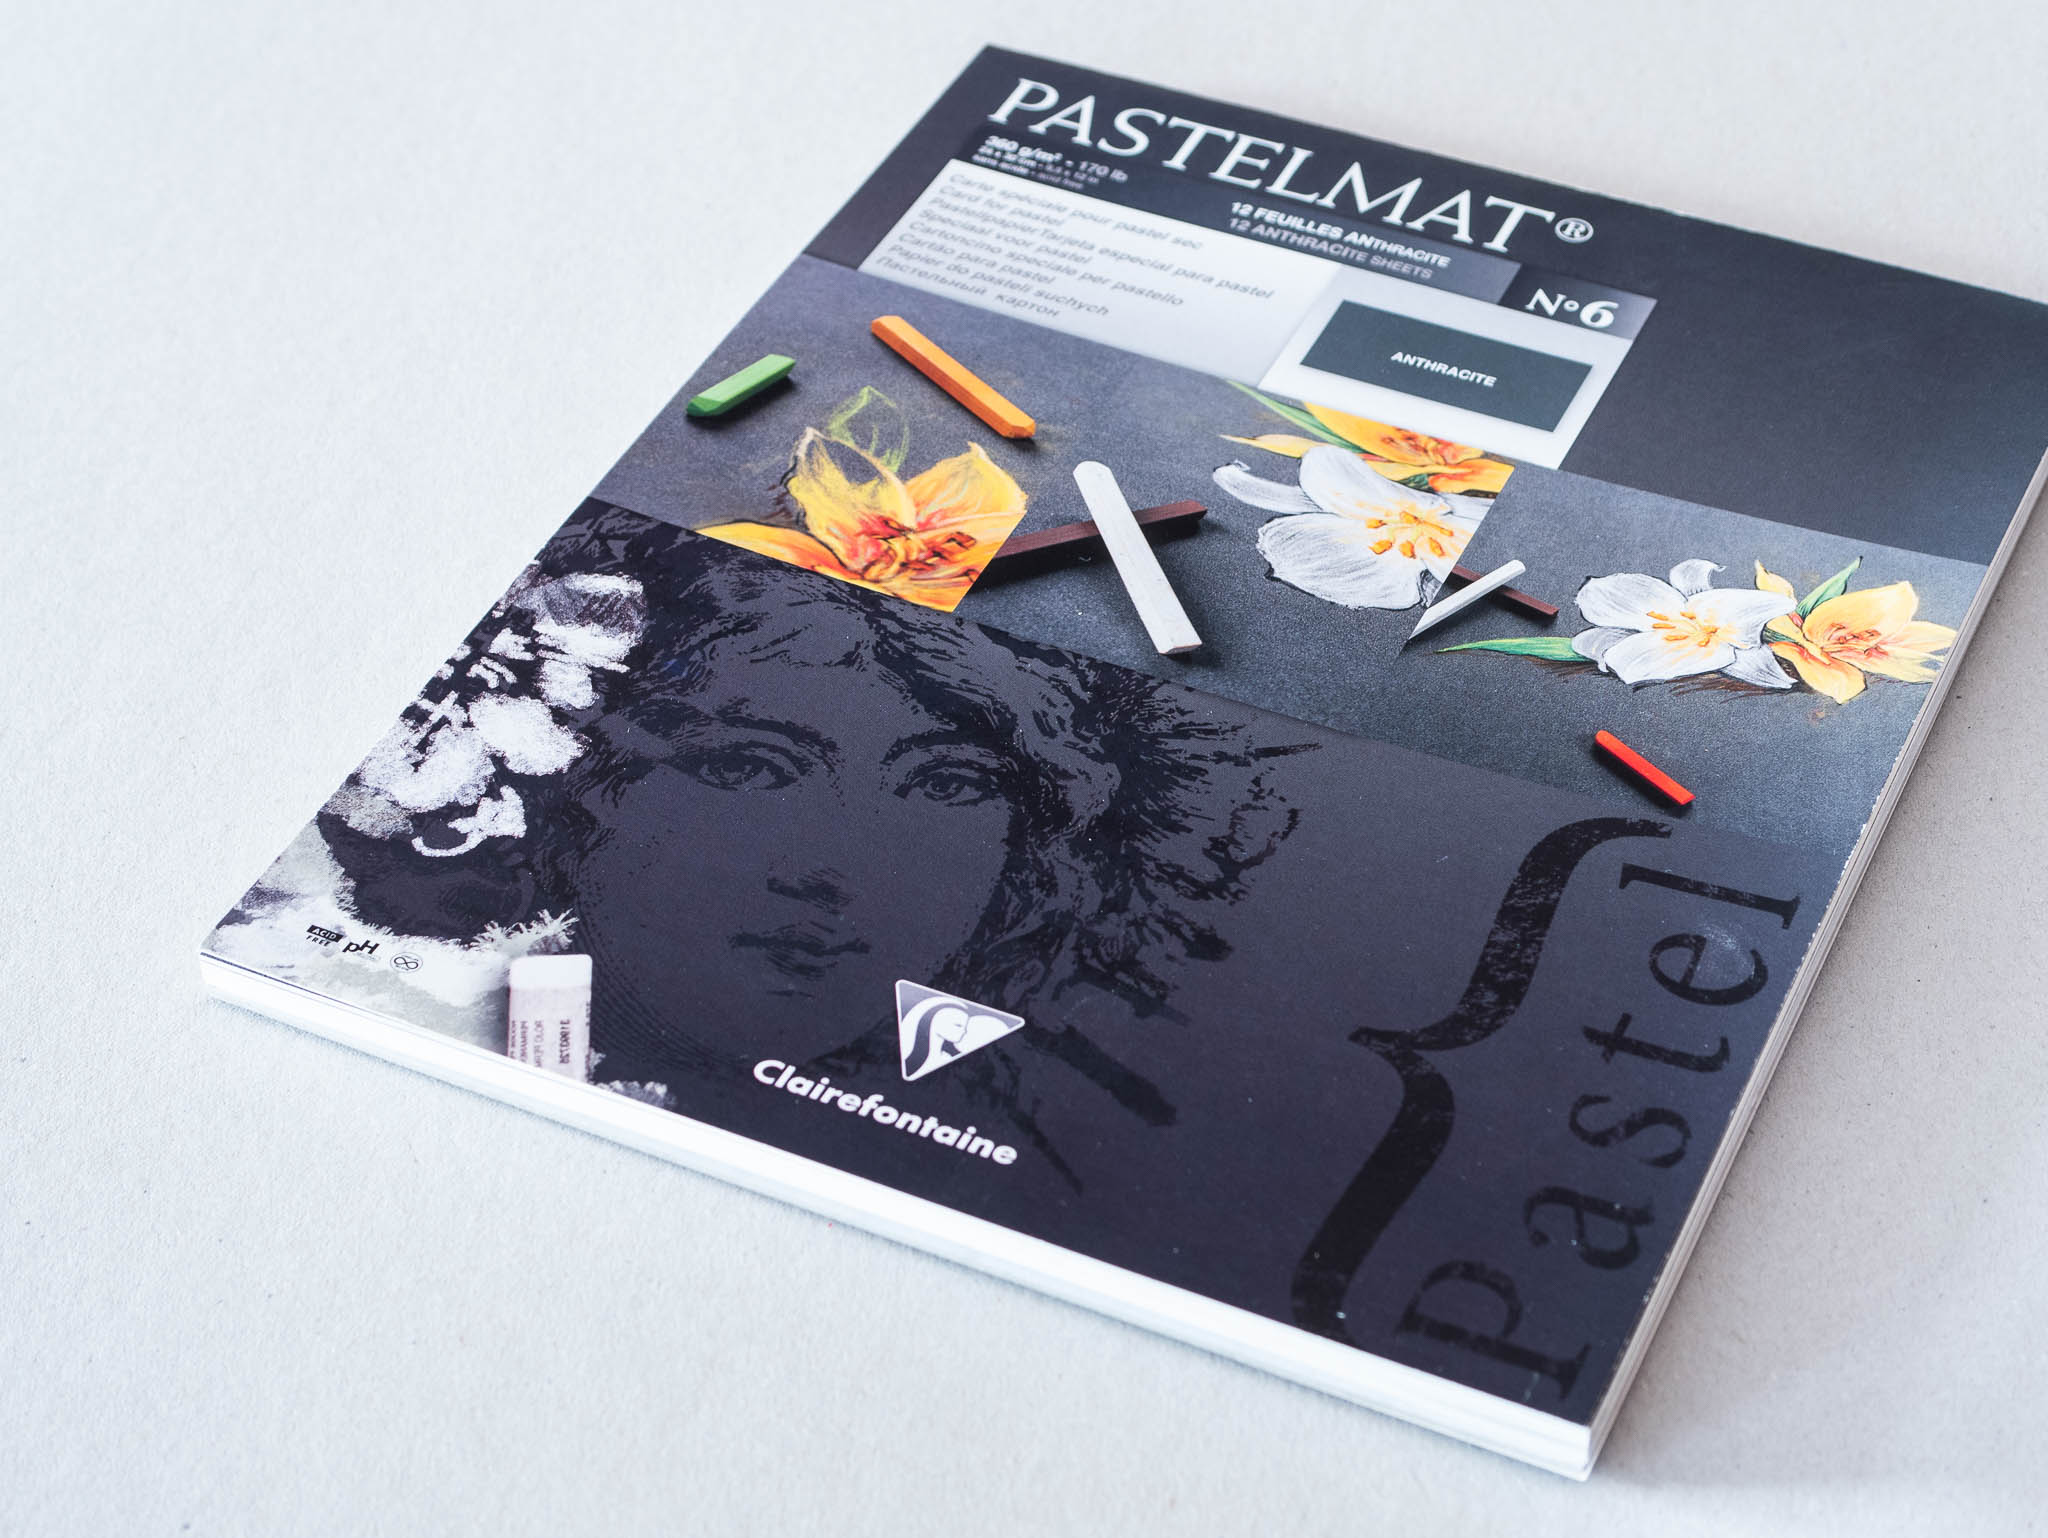  Clairefontaine 24 x 30 cm PastelMat Pastel Card Pad